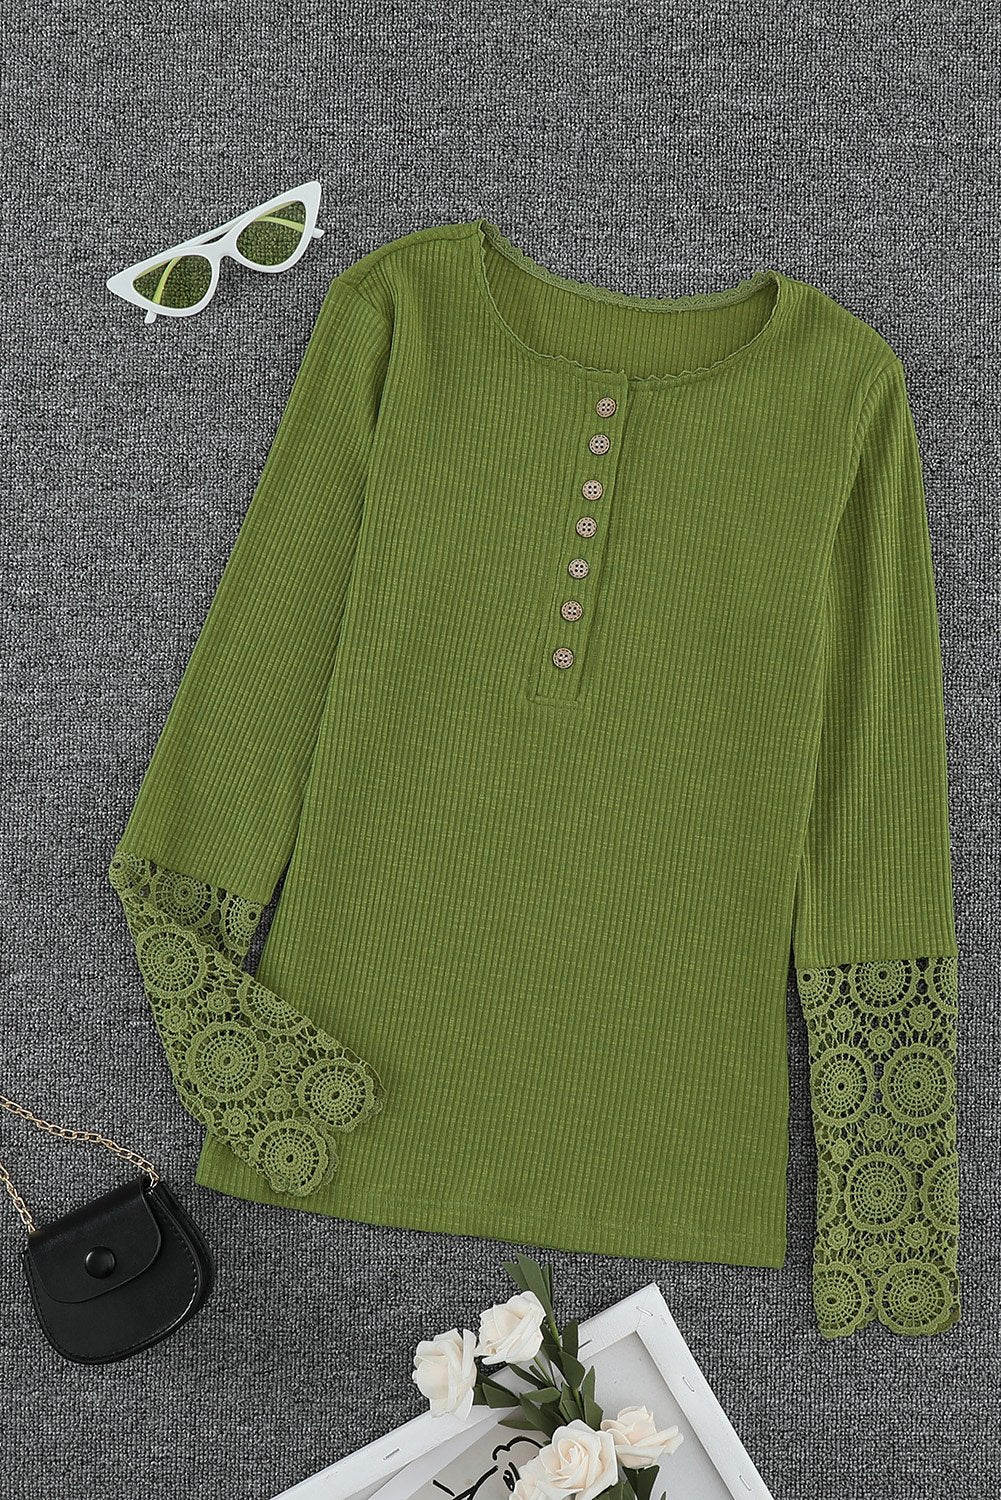 Women's Green Crochet Lace Hem Sleeve Button Casual TopWomen's Green Crochet Lace Hem Sleeve Button Casual Top